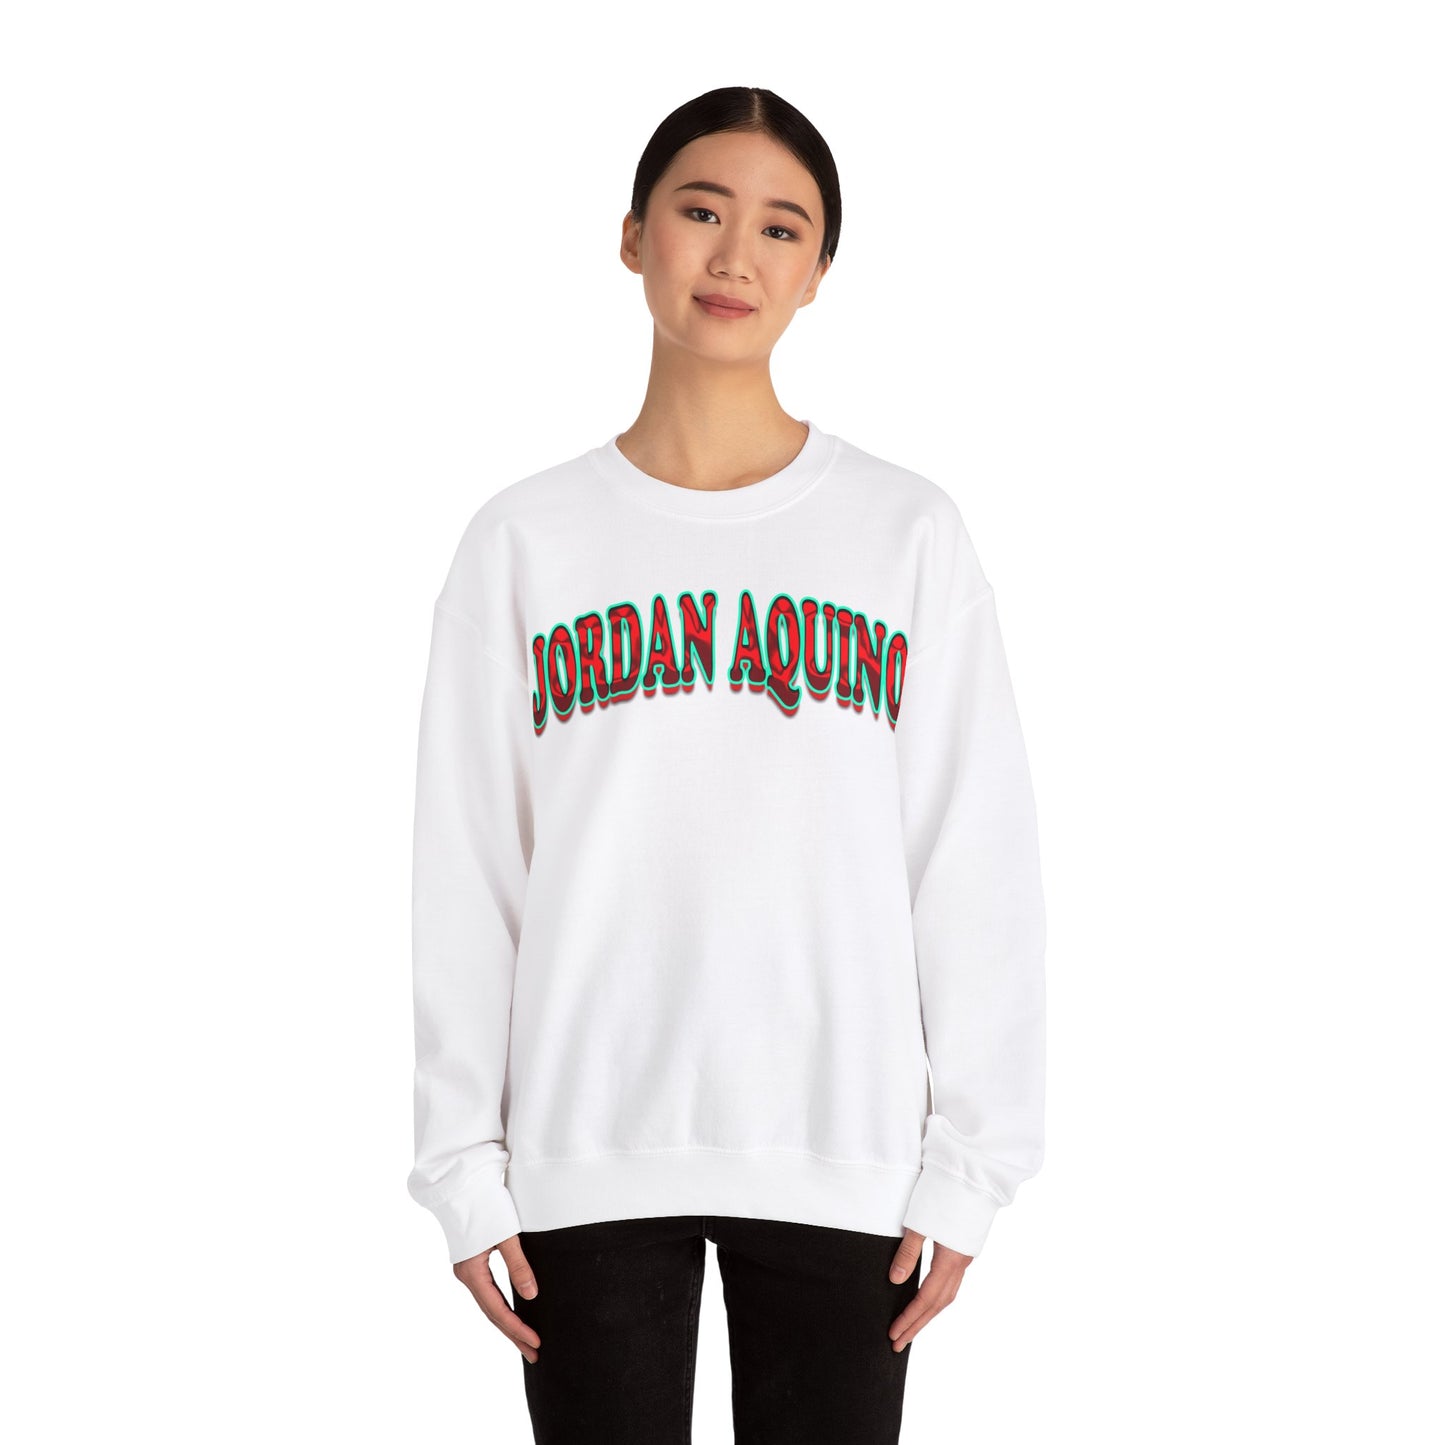 Jordan Aquino Crewneck Sweatshirt